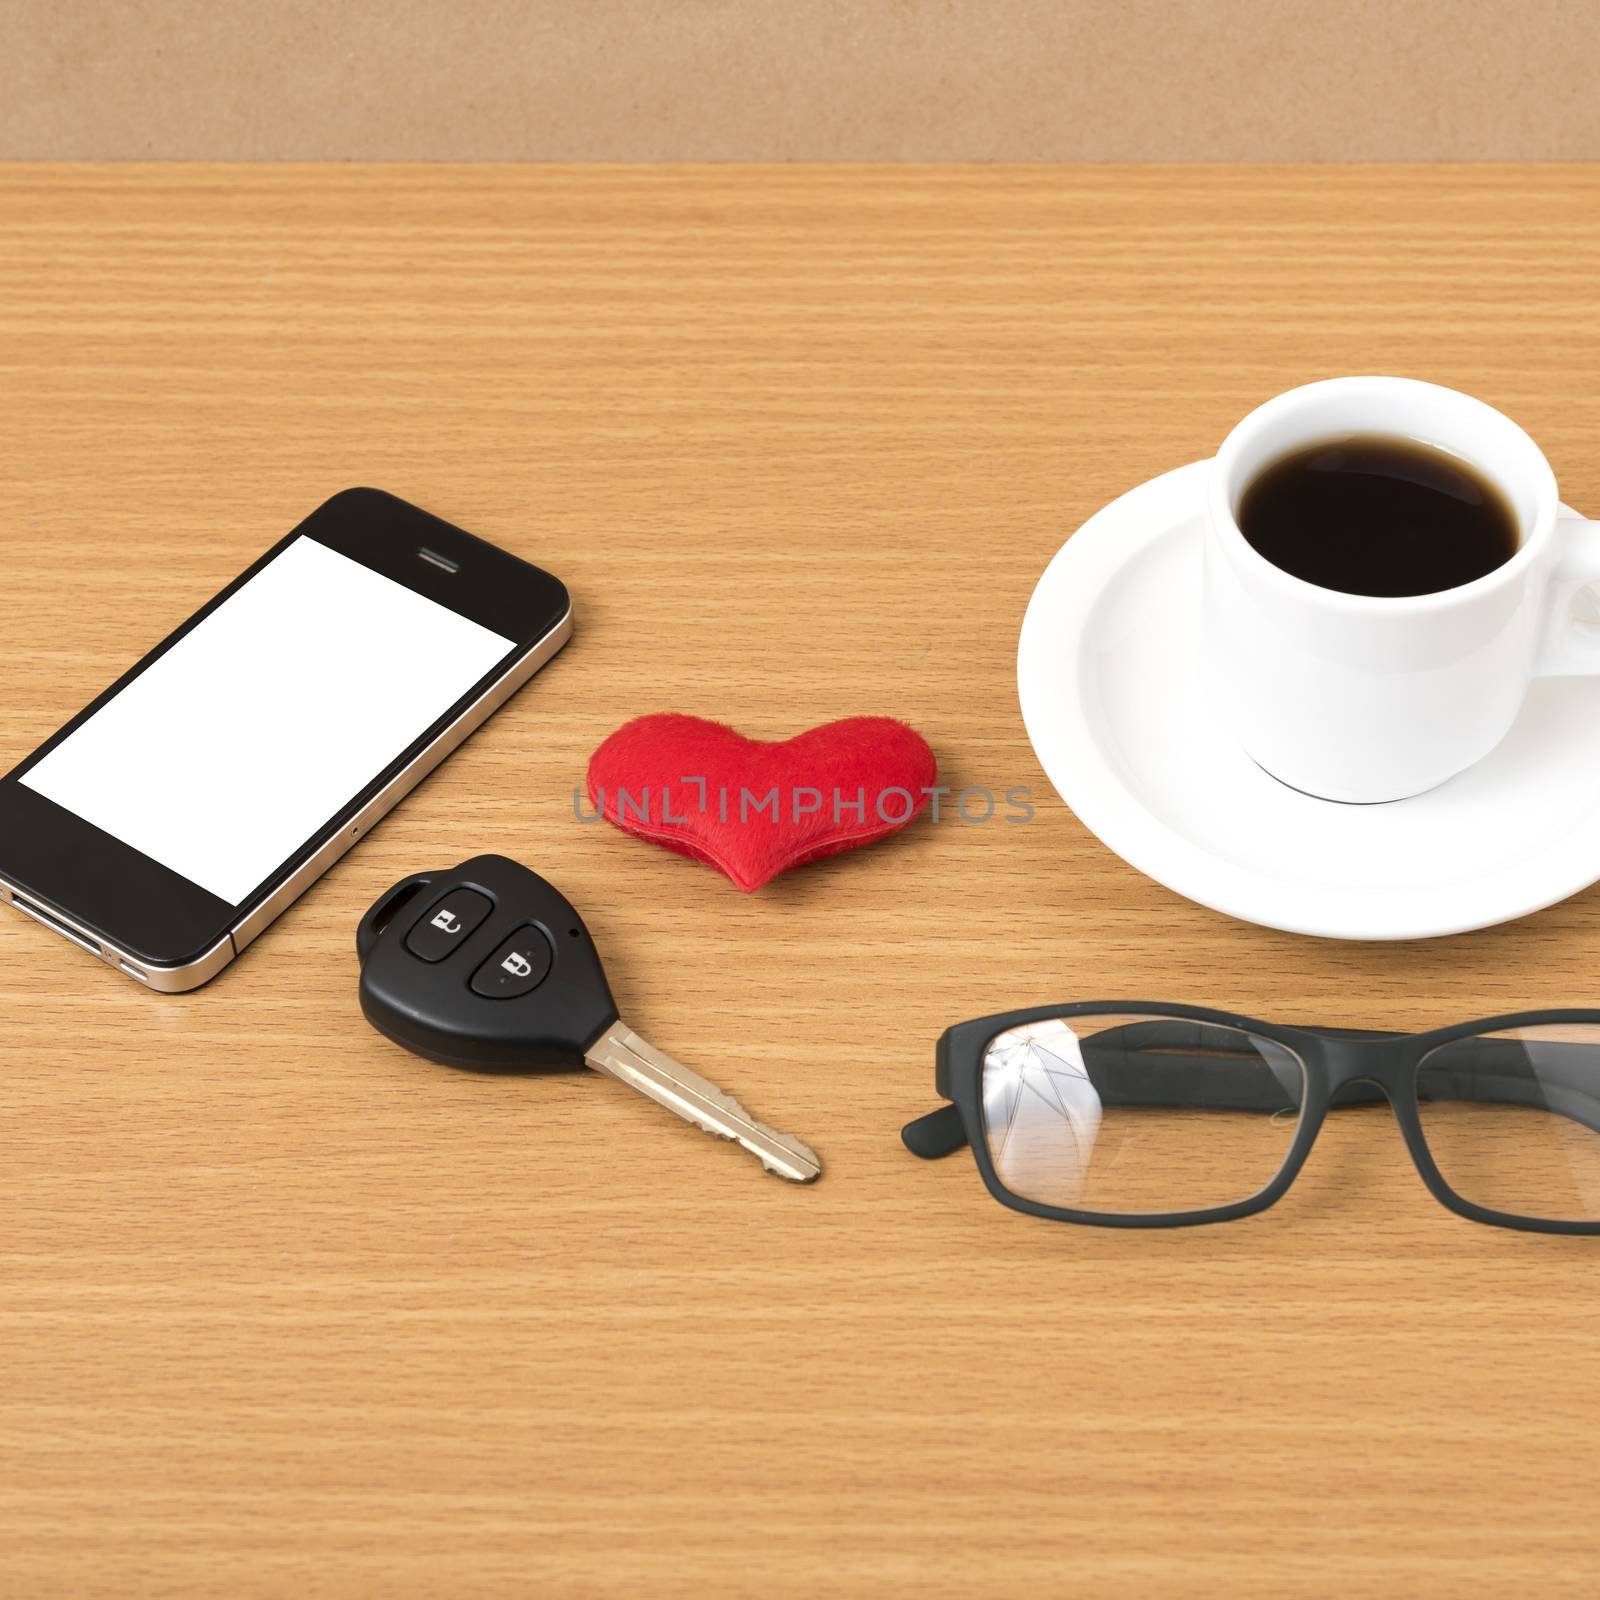 coffee,phone,eyeglasses and car key by ammza12